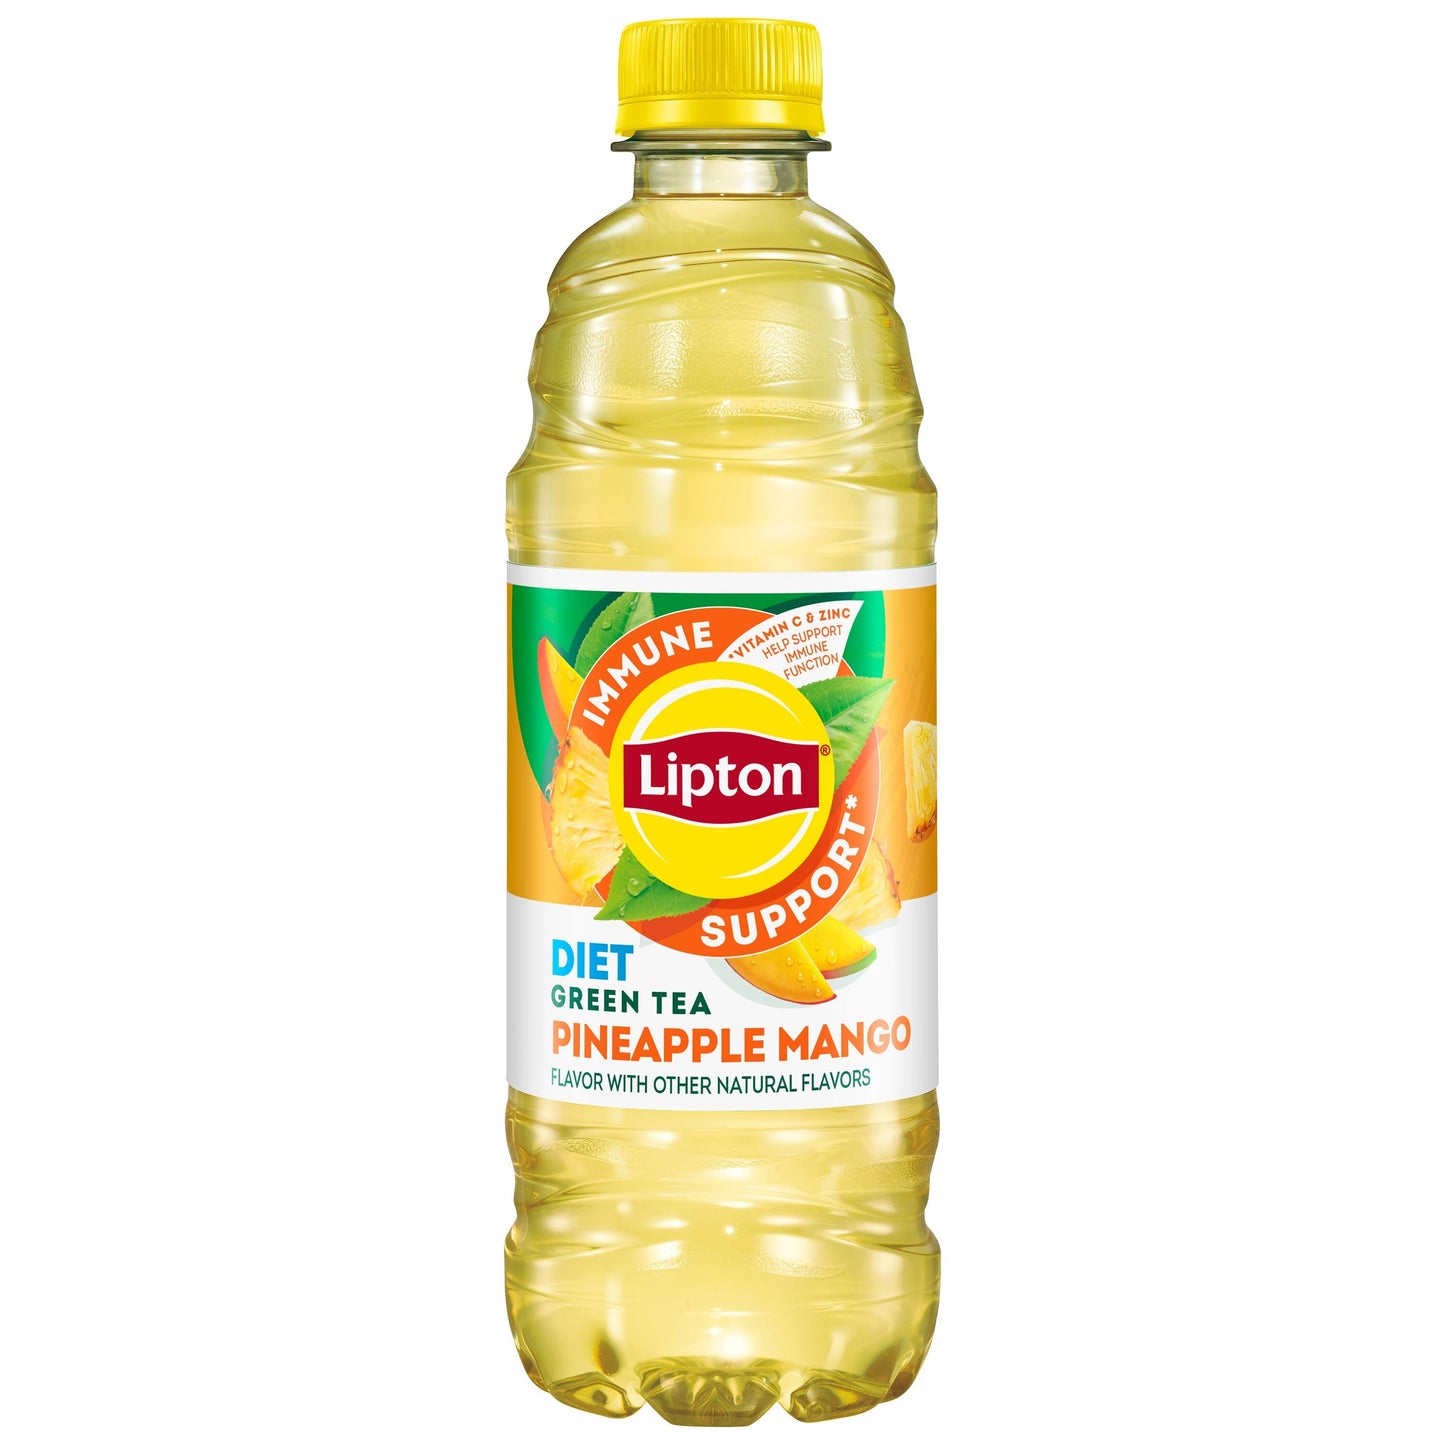 Lipton Iced Tea Immune Support Diet Pineapple Mango Green Tea 16.9 Fl Oz, 12 Count